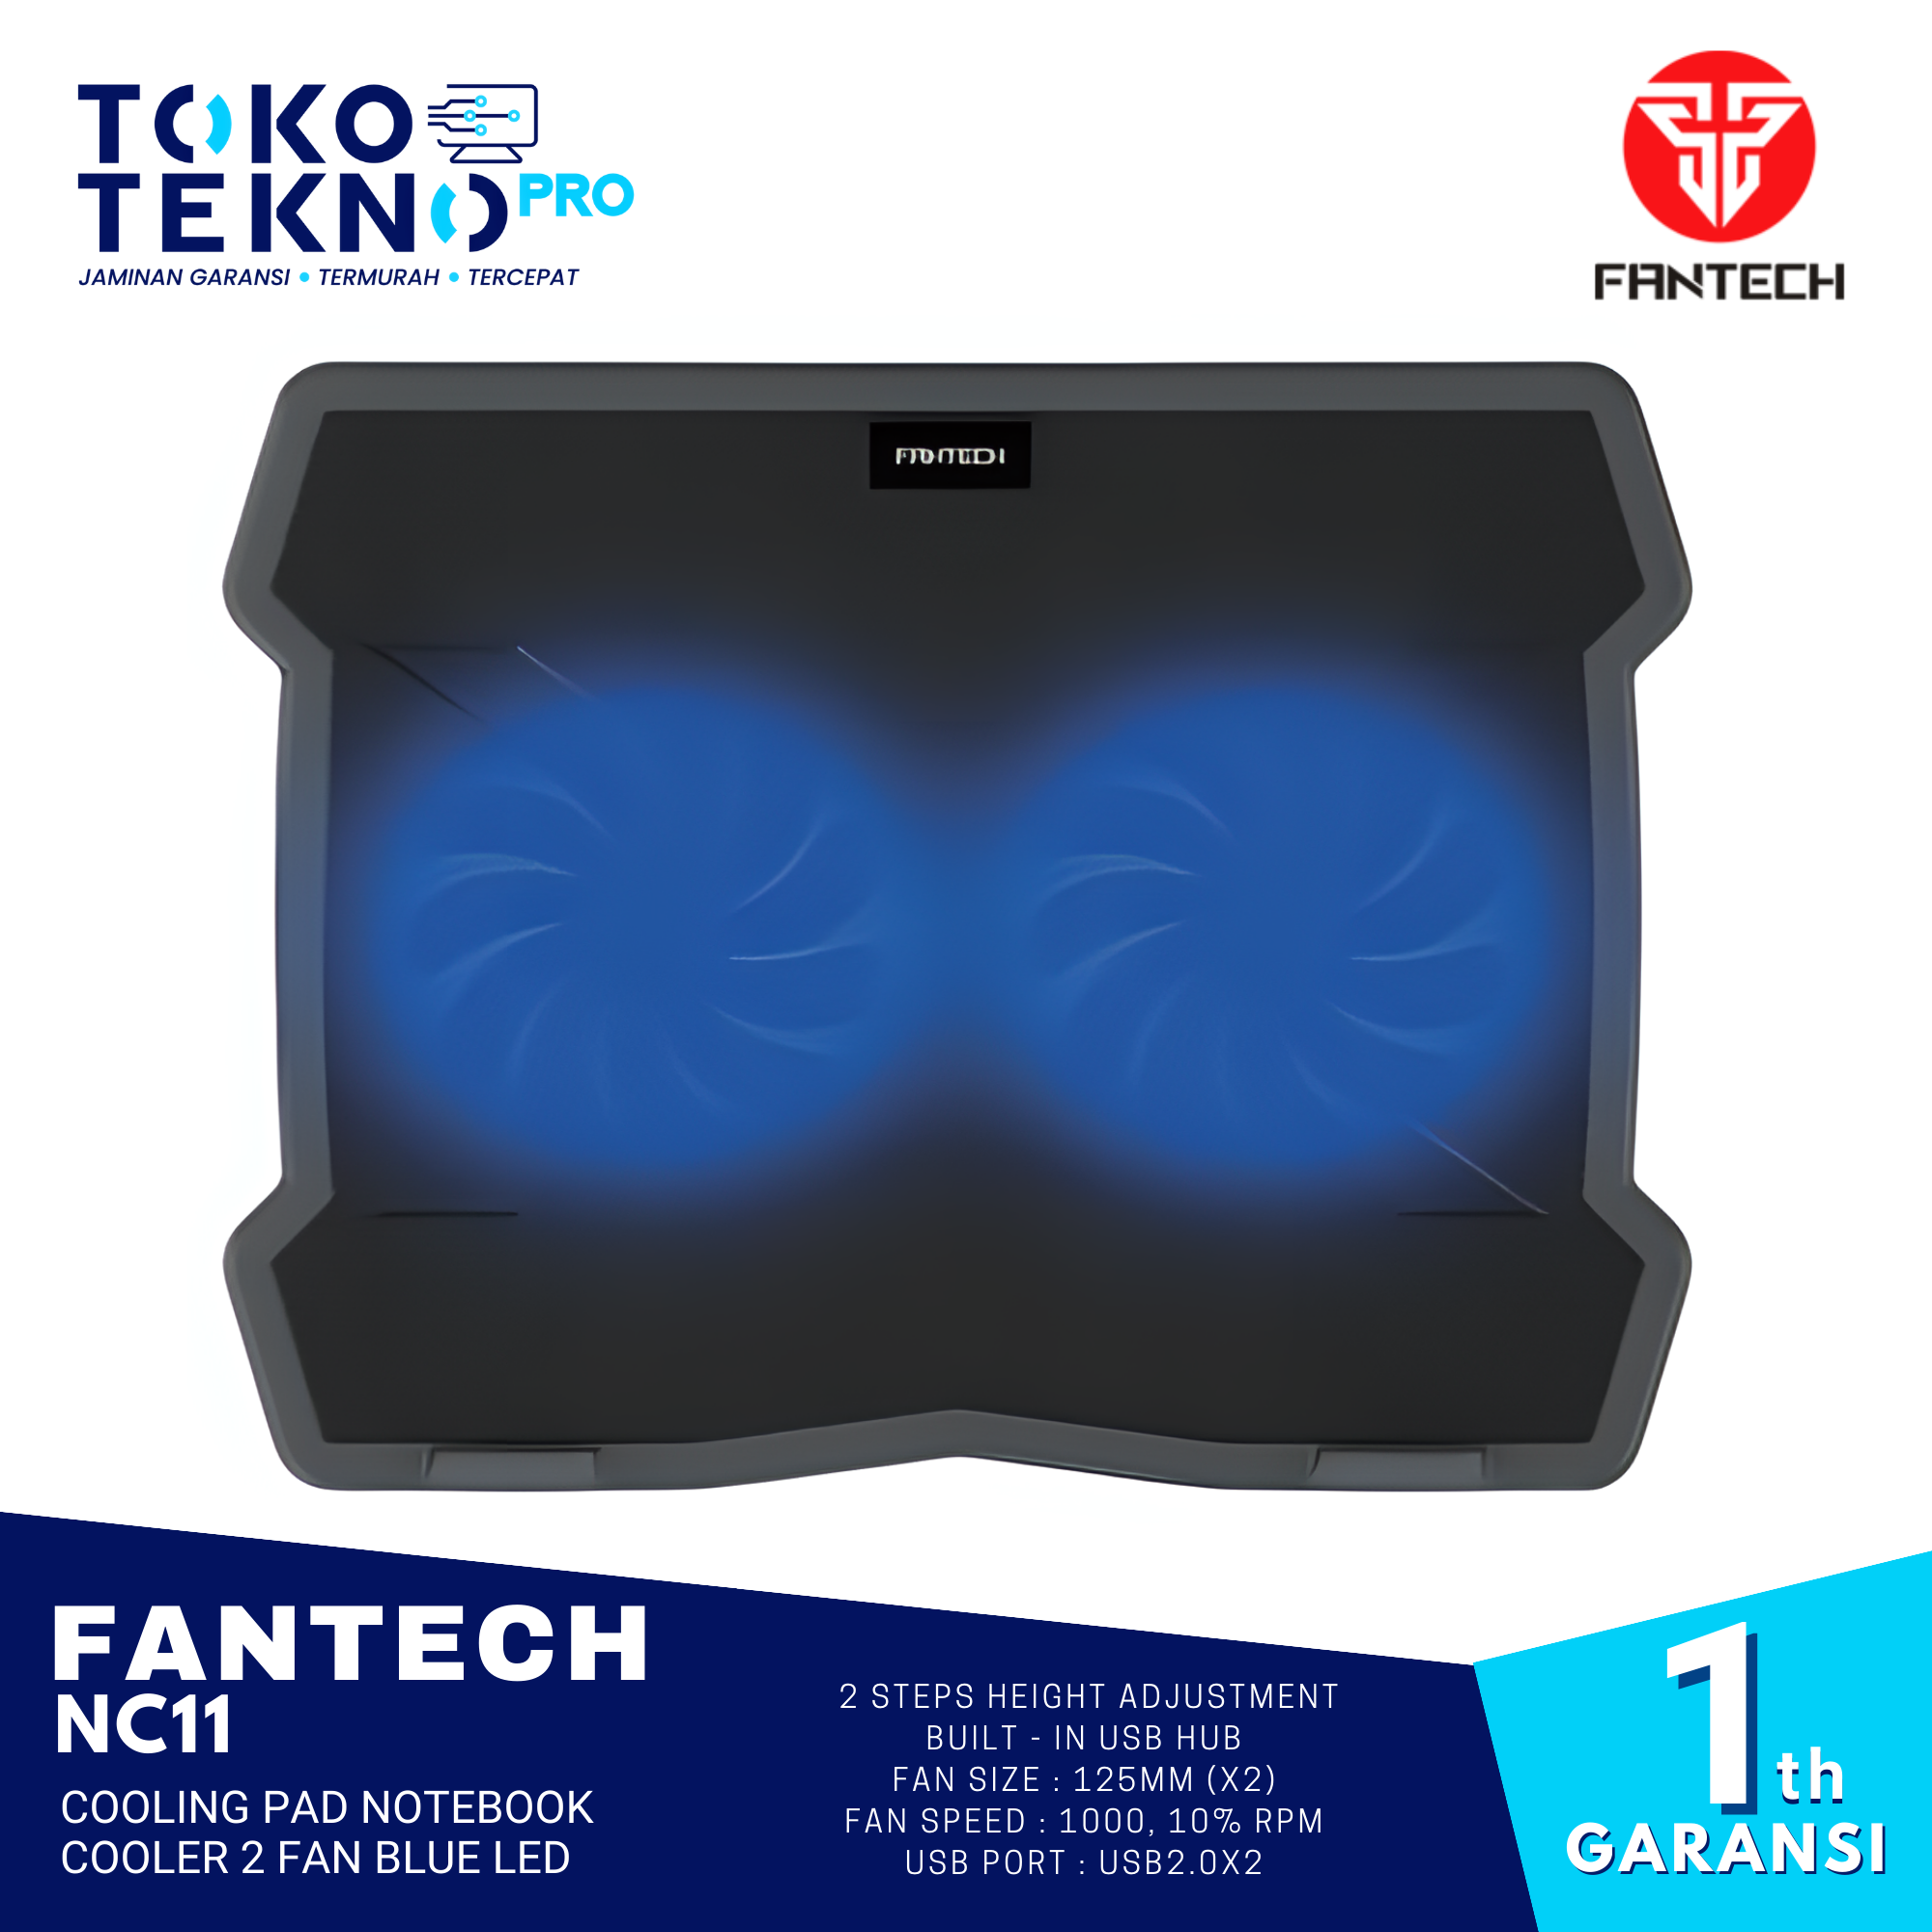 Fantech NC11 Cooling Pad Notebook Cooler 2 Fan Blue LED